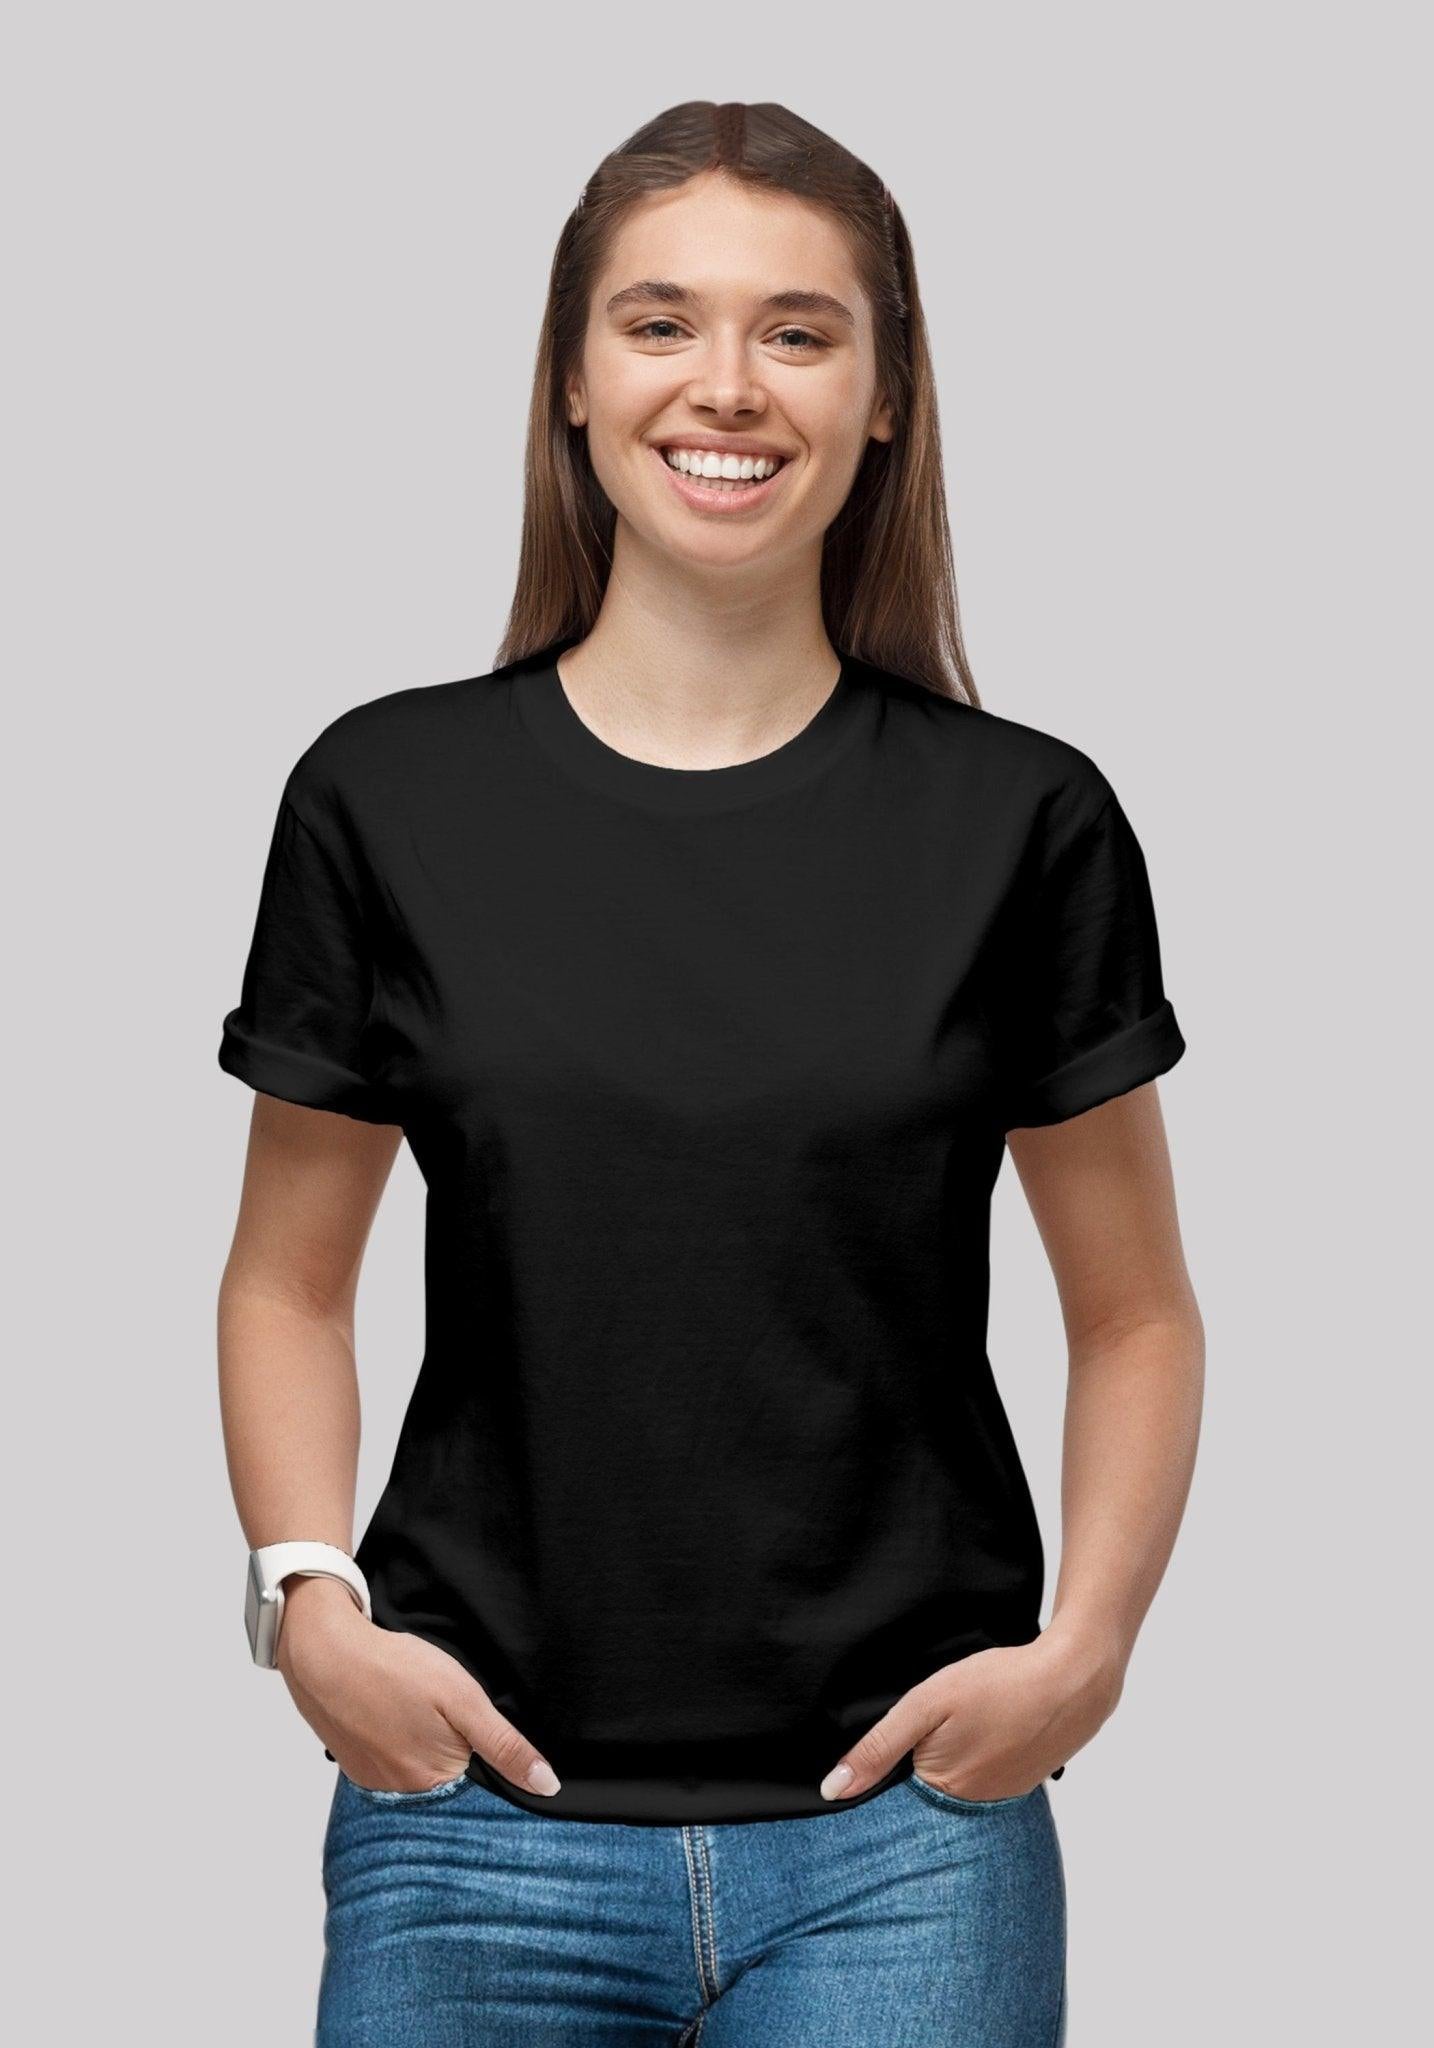 Solid Plain T Shirt For Women In Jet Black Colour Variant